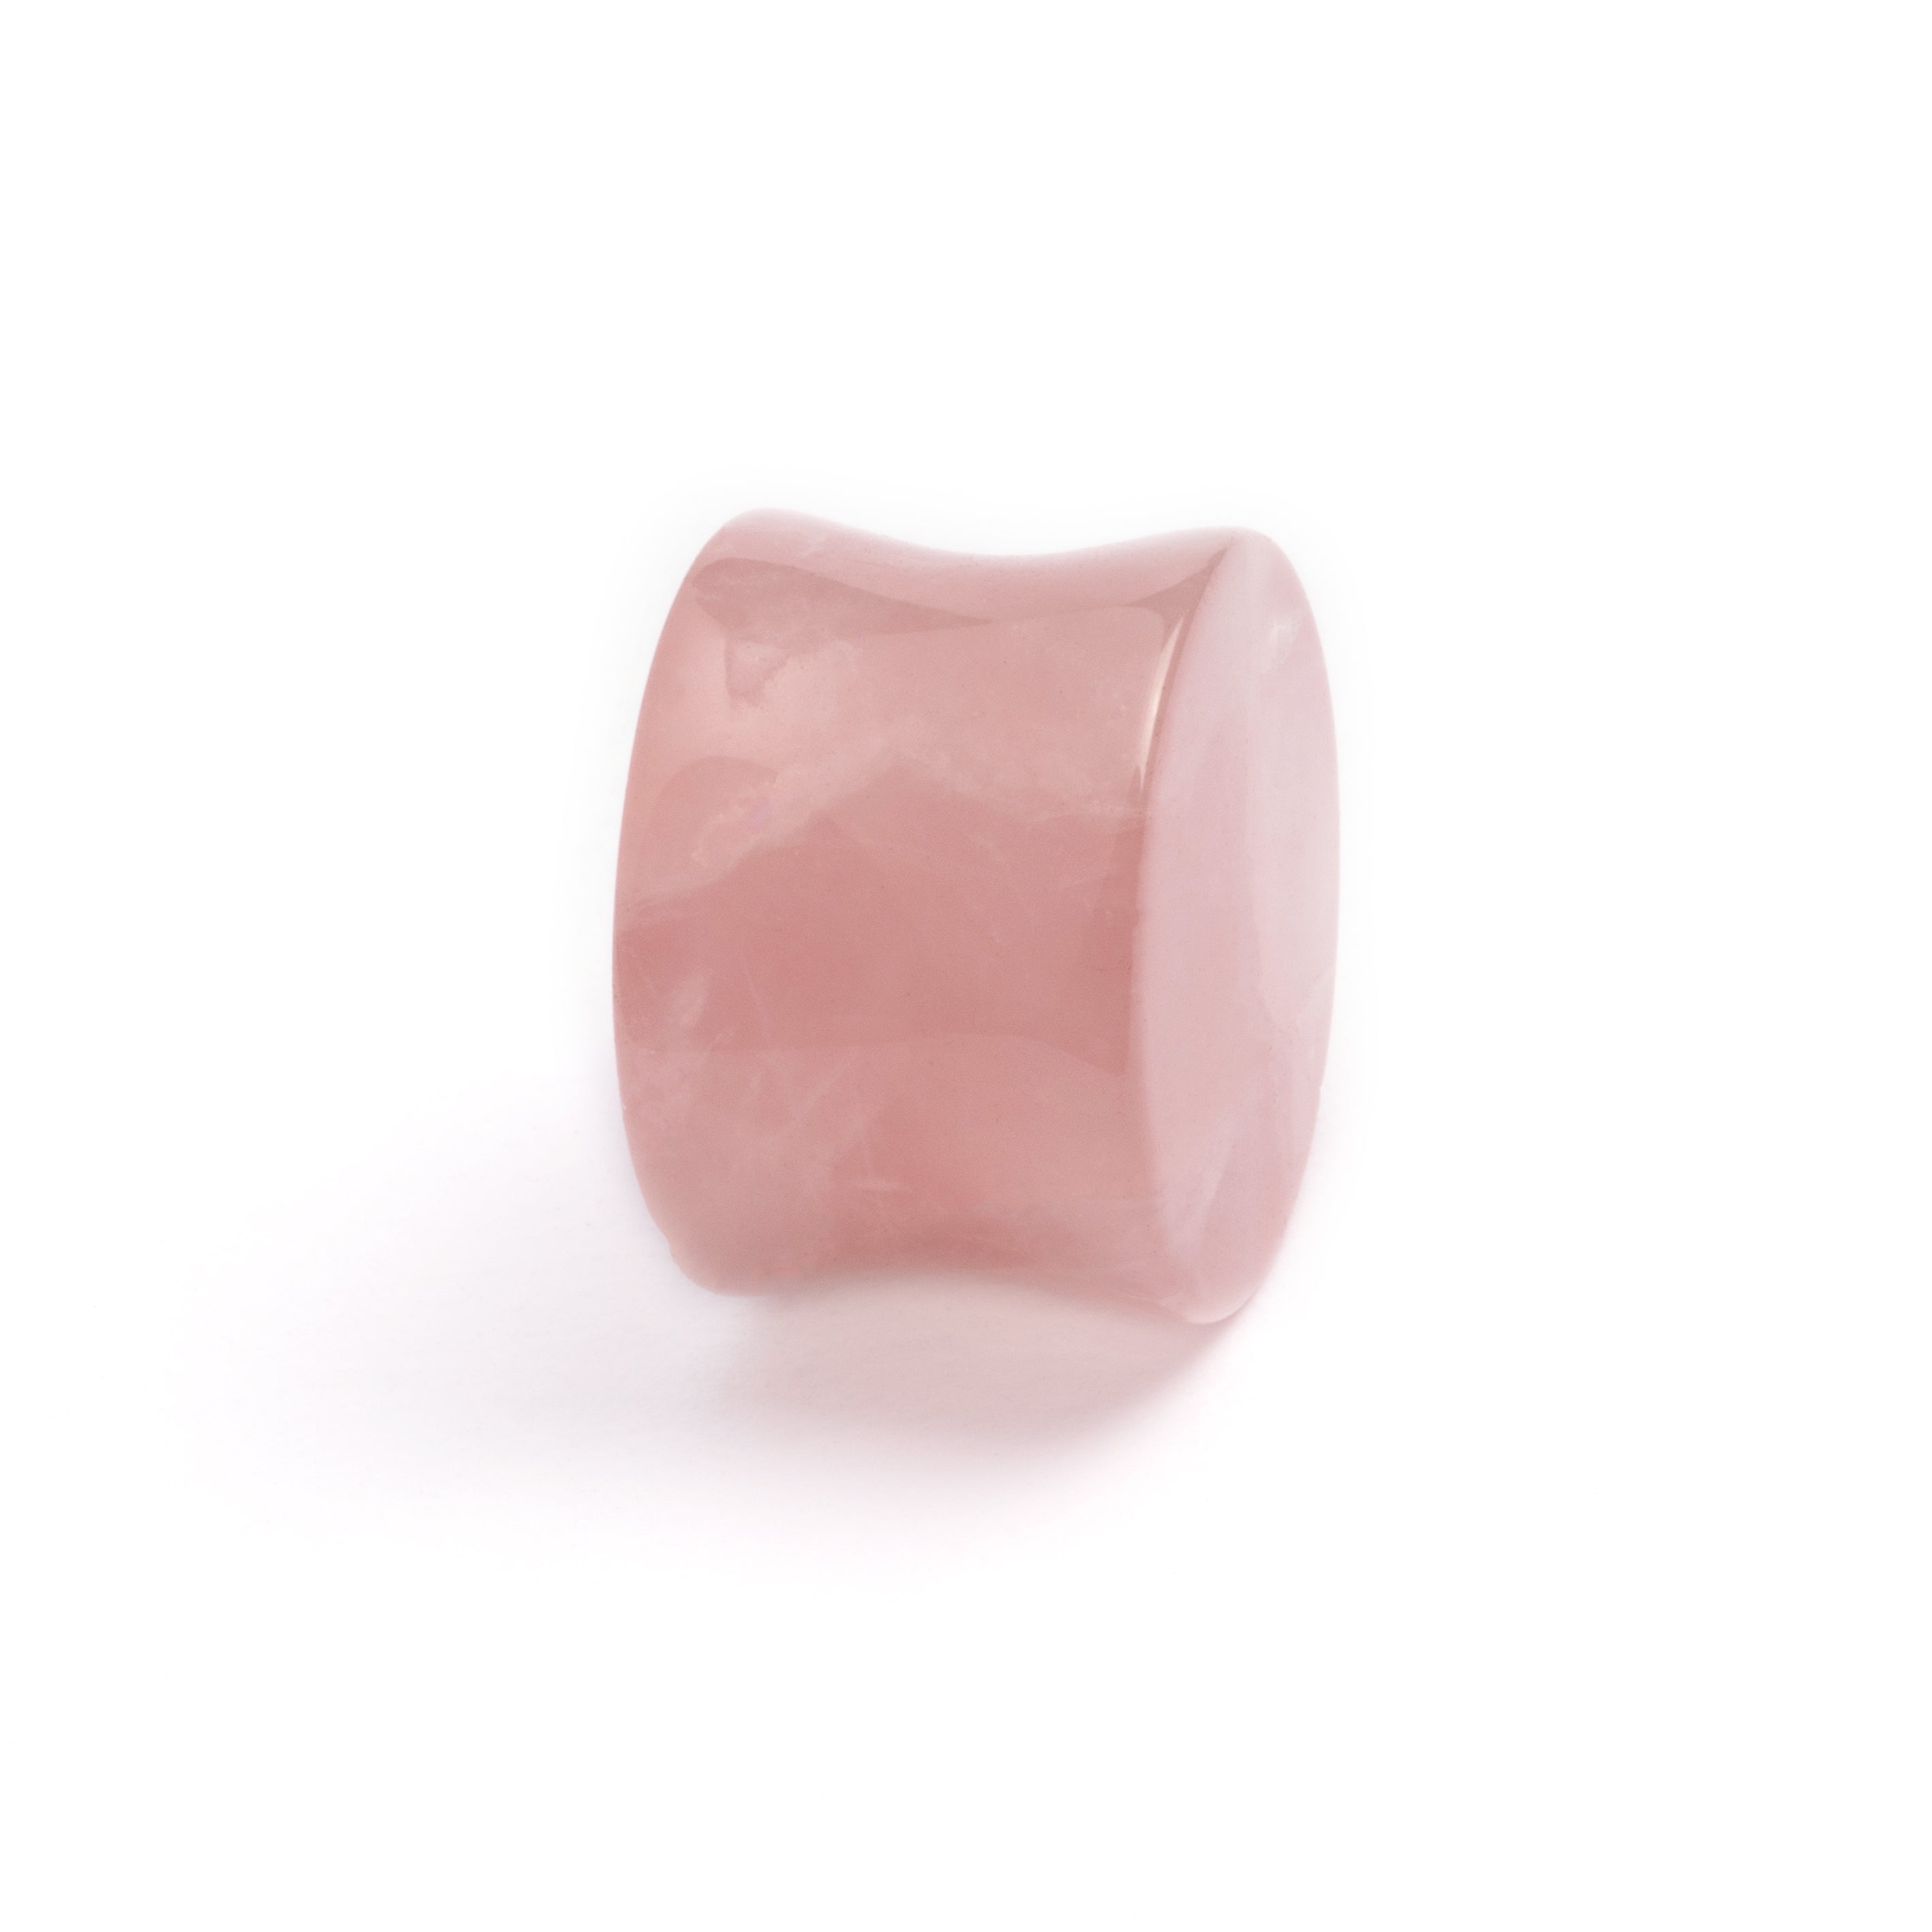 single rose quartz double flare stone ear plug side view